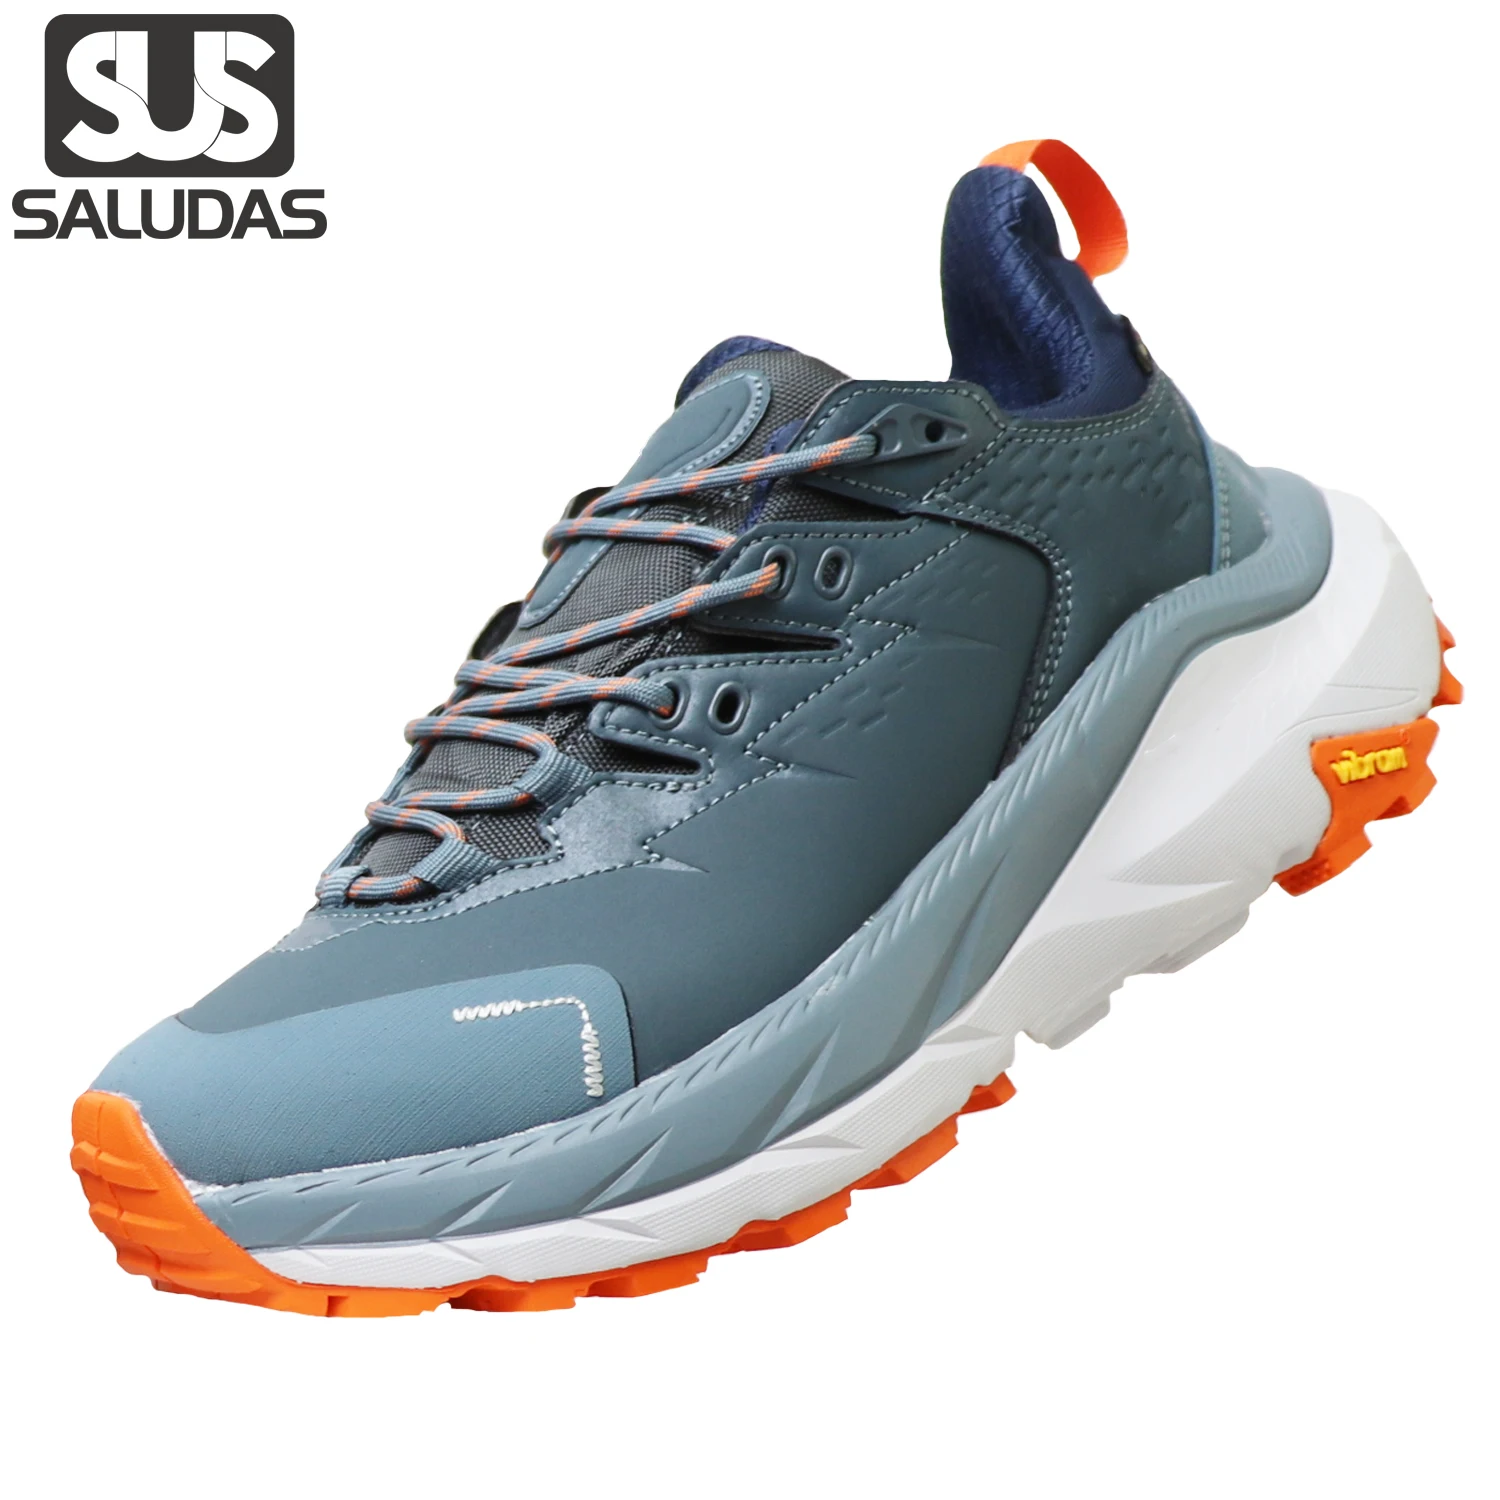 

SALUDAS Kaha 2 Low GTX Hiking Shoes for Men Waterproof Mountain Trail Running Shoes Non-slip Jungle Camping Trekking Sneakers